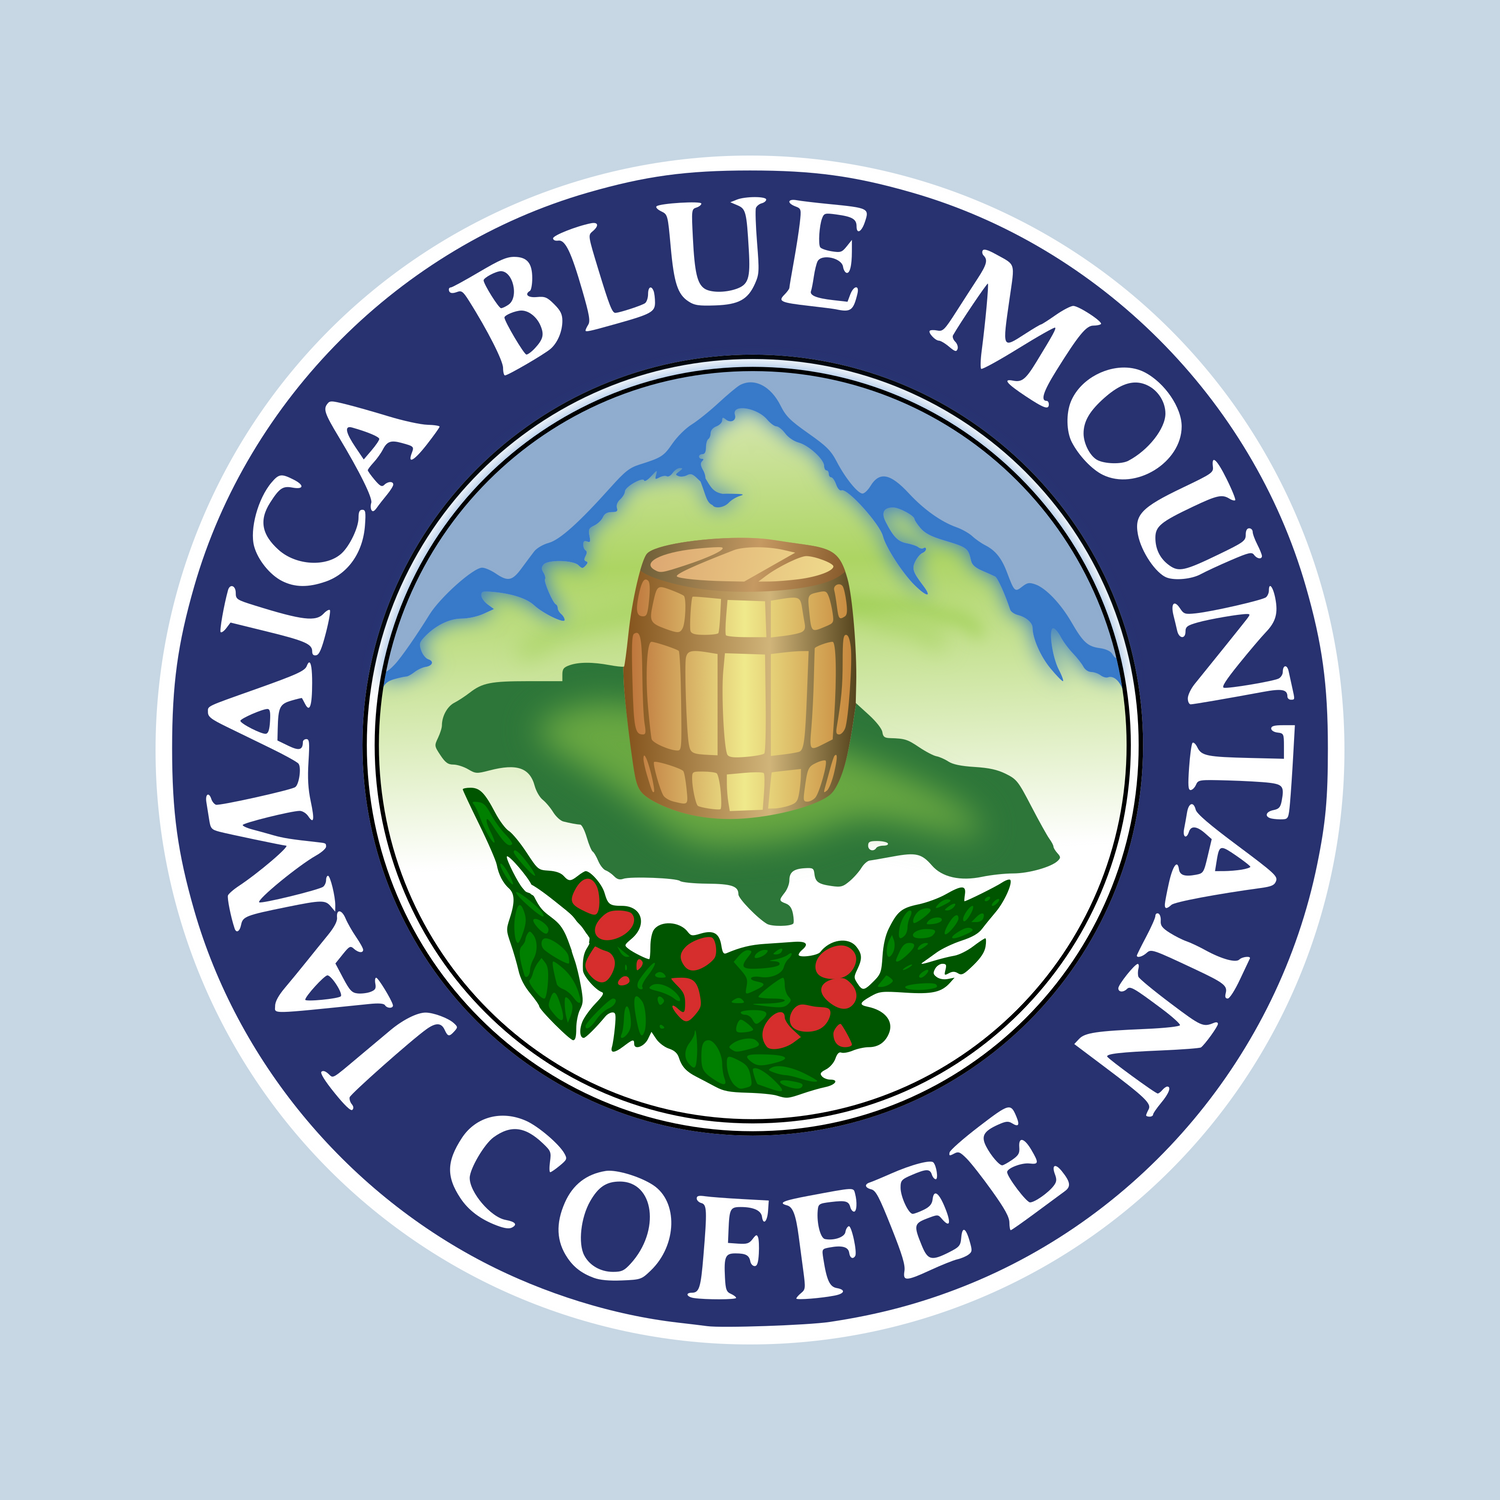 Jamaica Blue Mountain Coffee logo